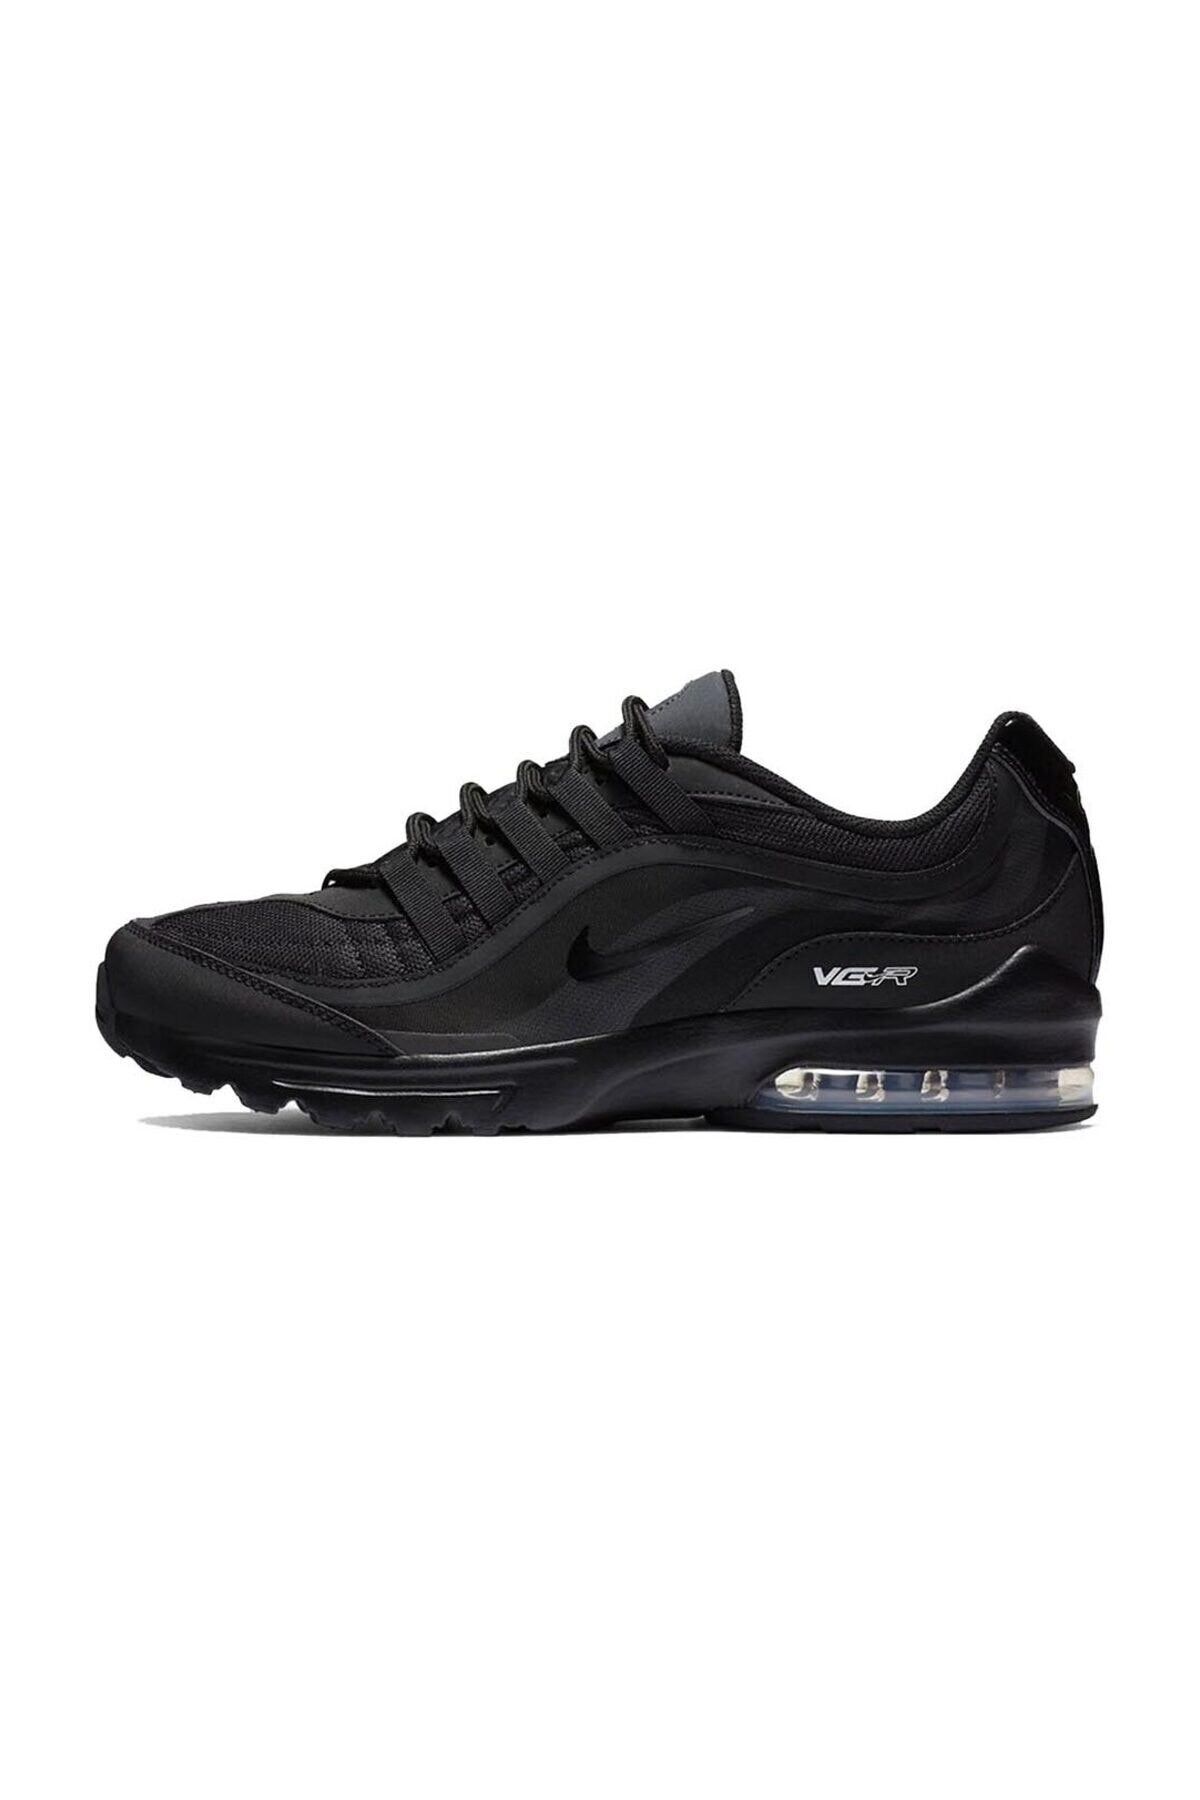 Nike Air Max Vg-r Erkek Günlük Spor Ayakkabı Ck7583-001-siyah